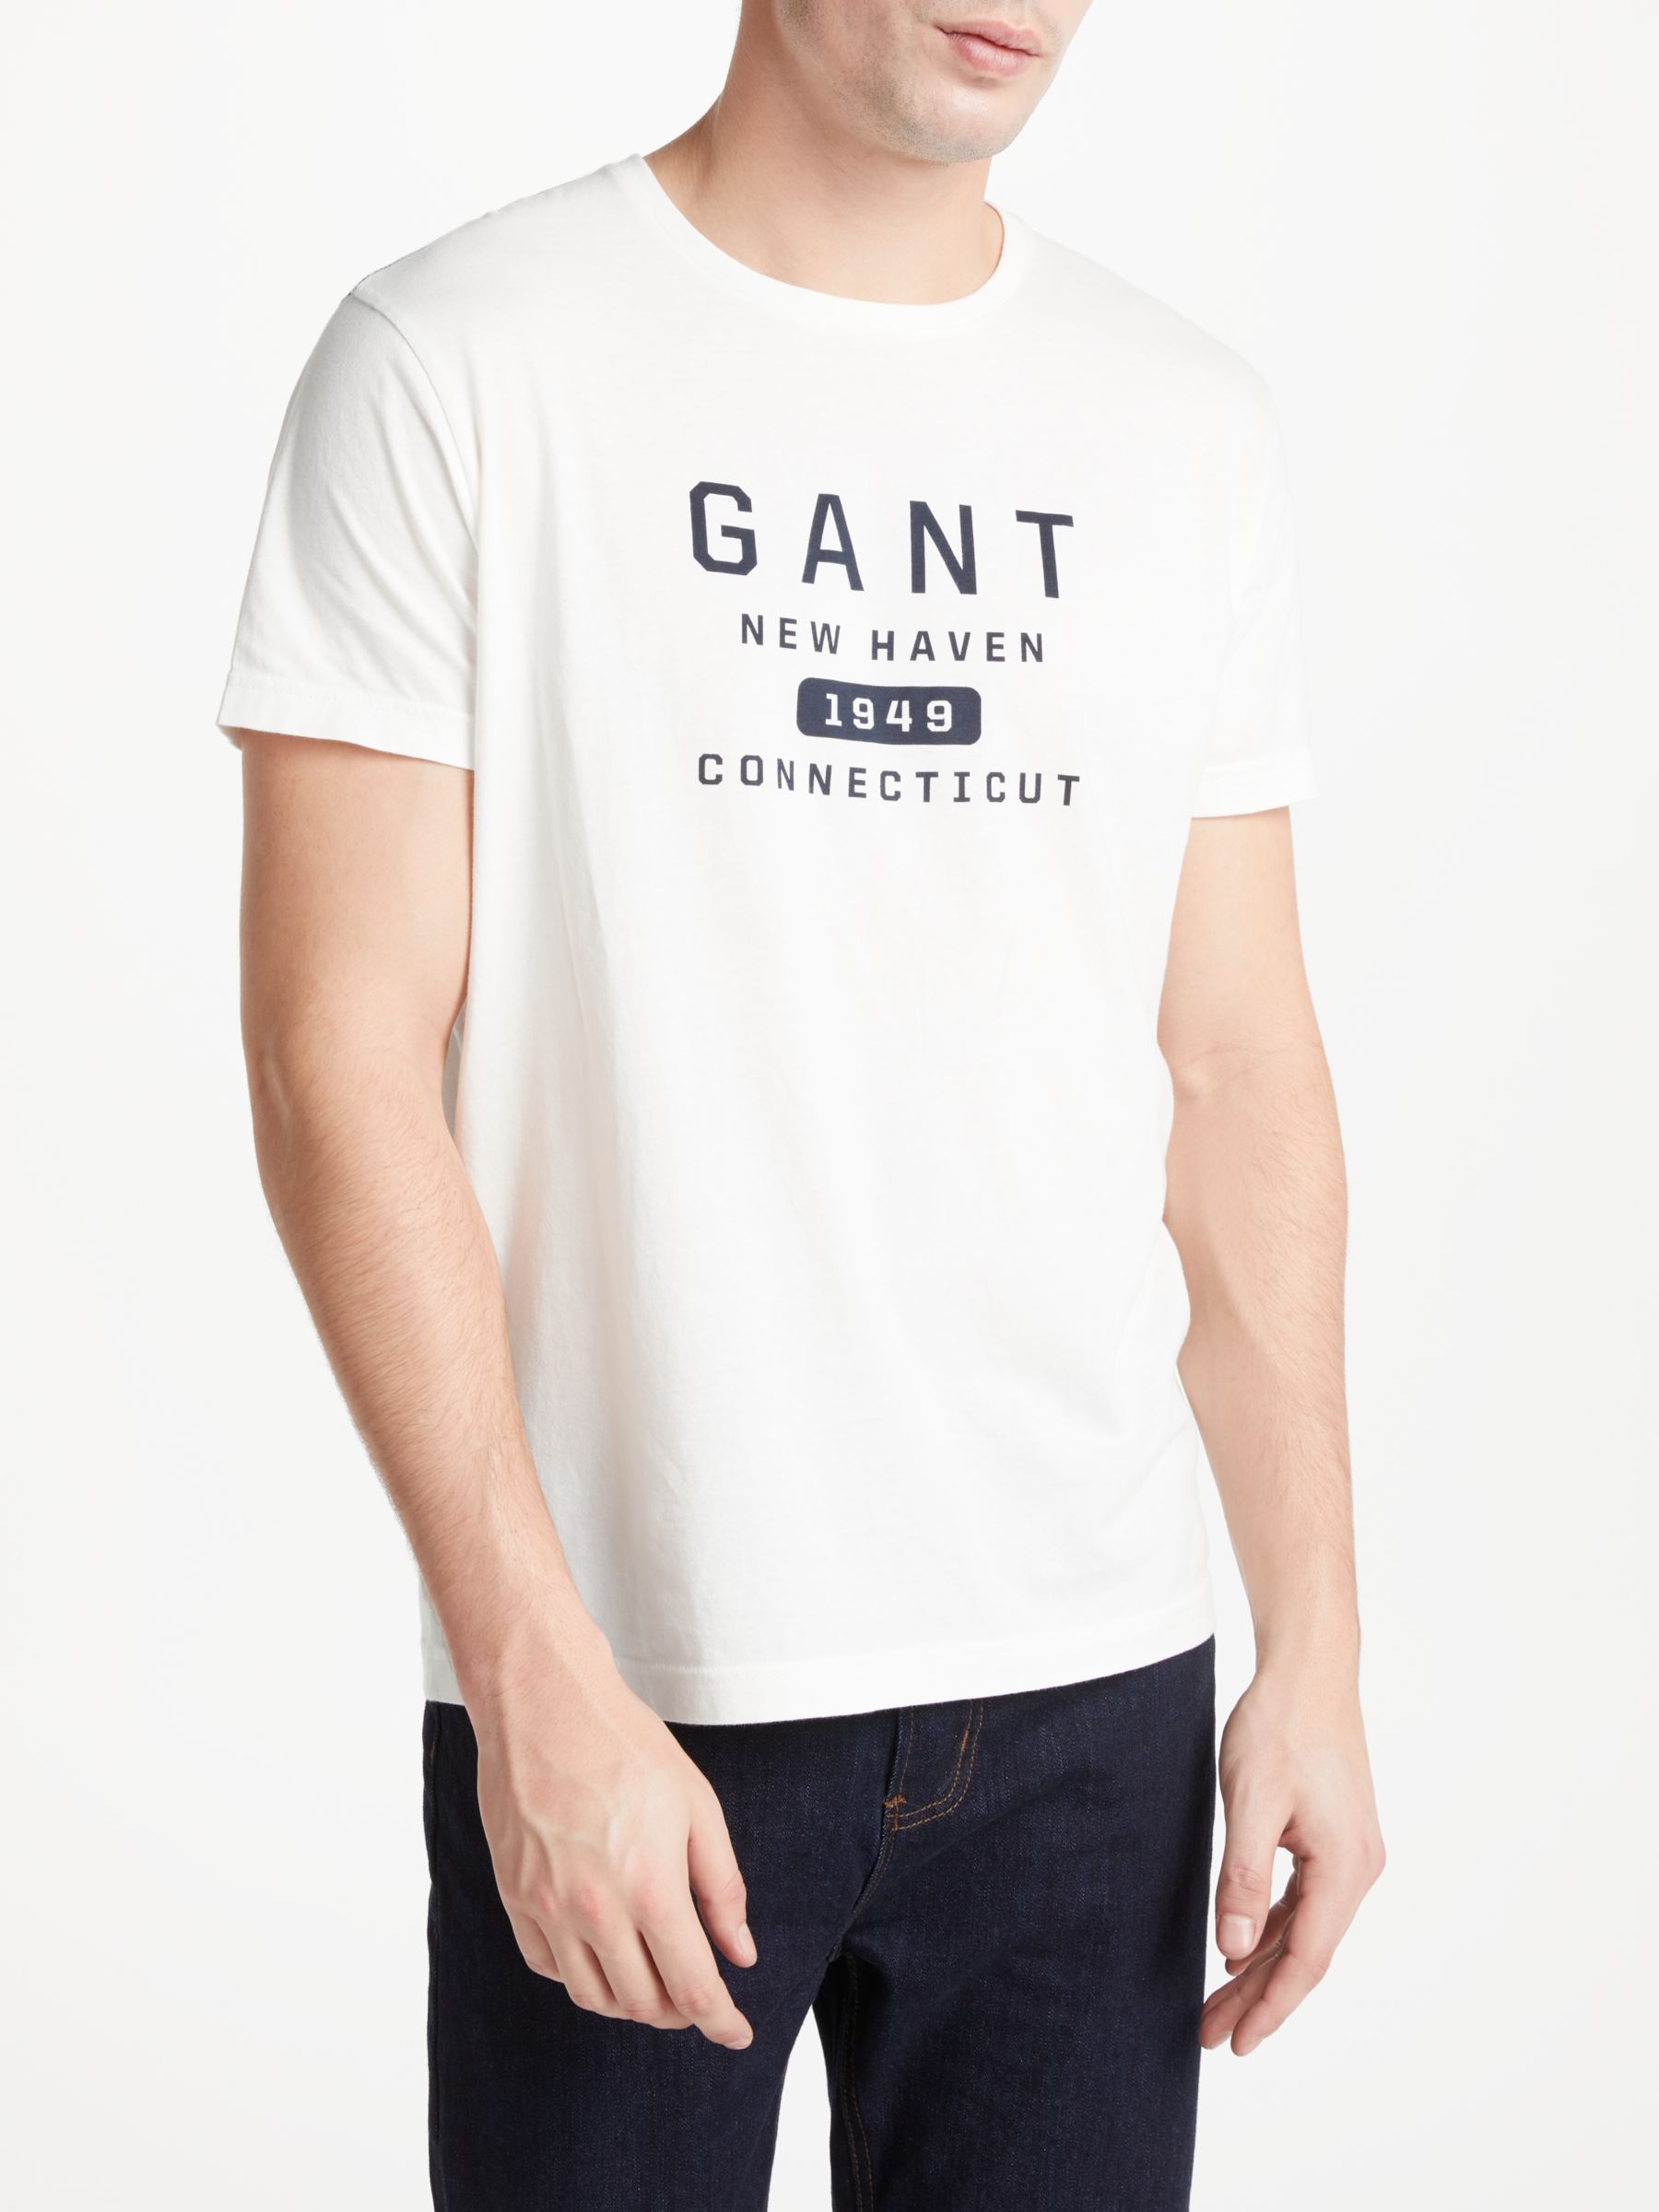 Gant New Haven Crew Neck T Shirt At John Lewis Partners